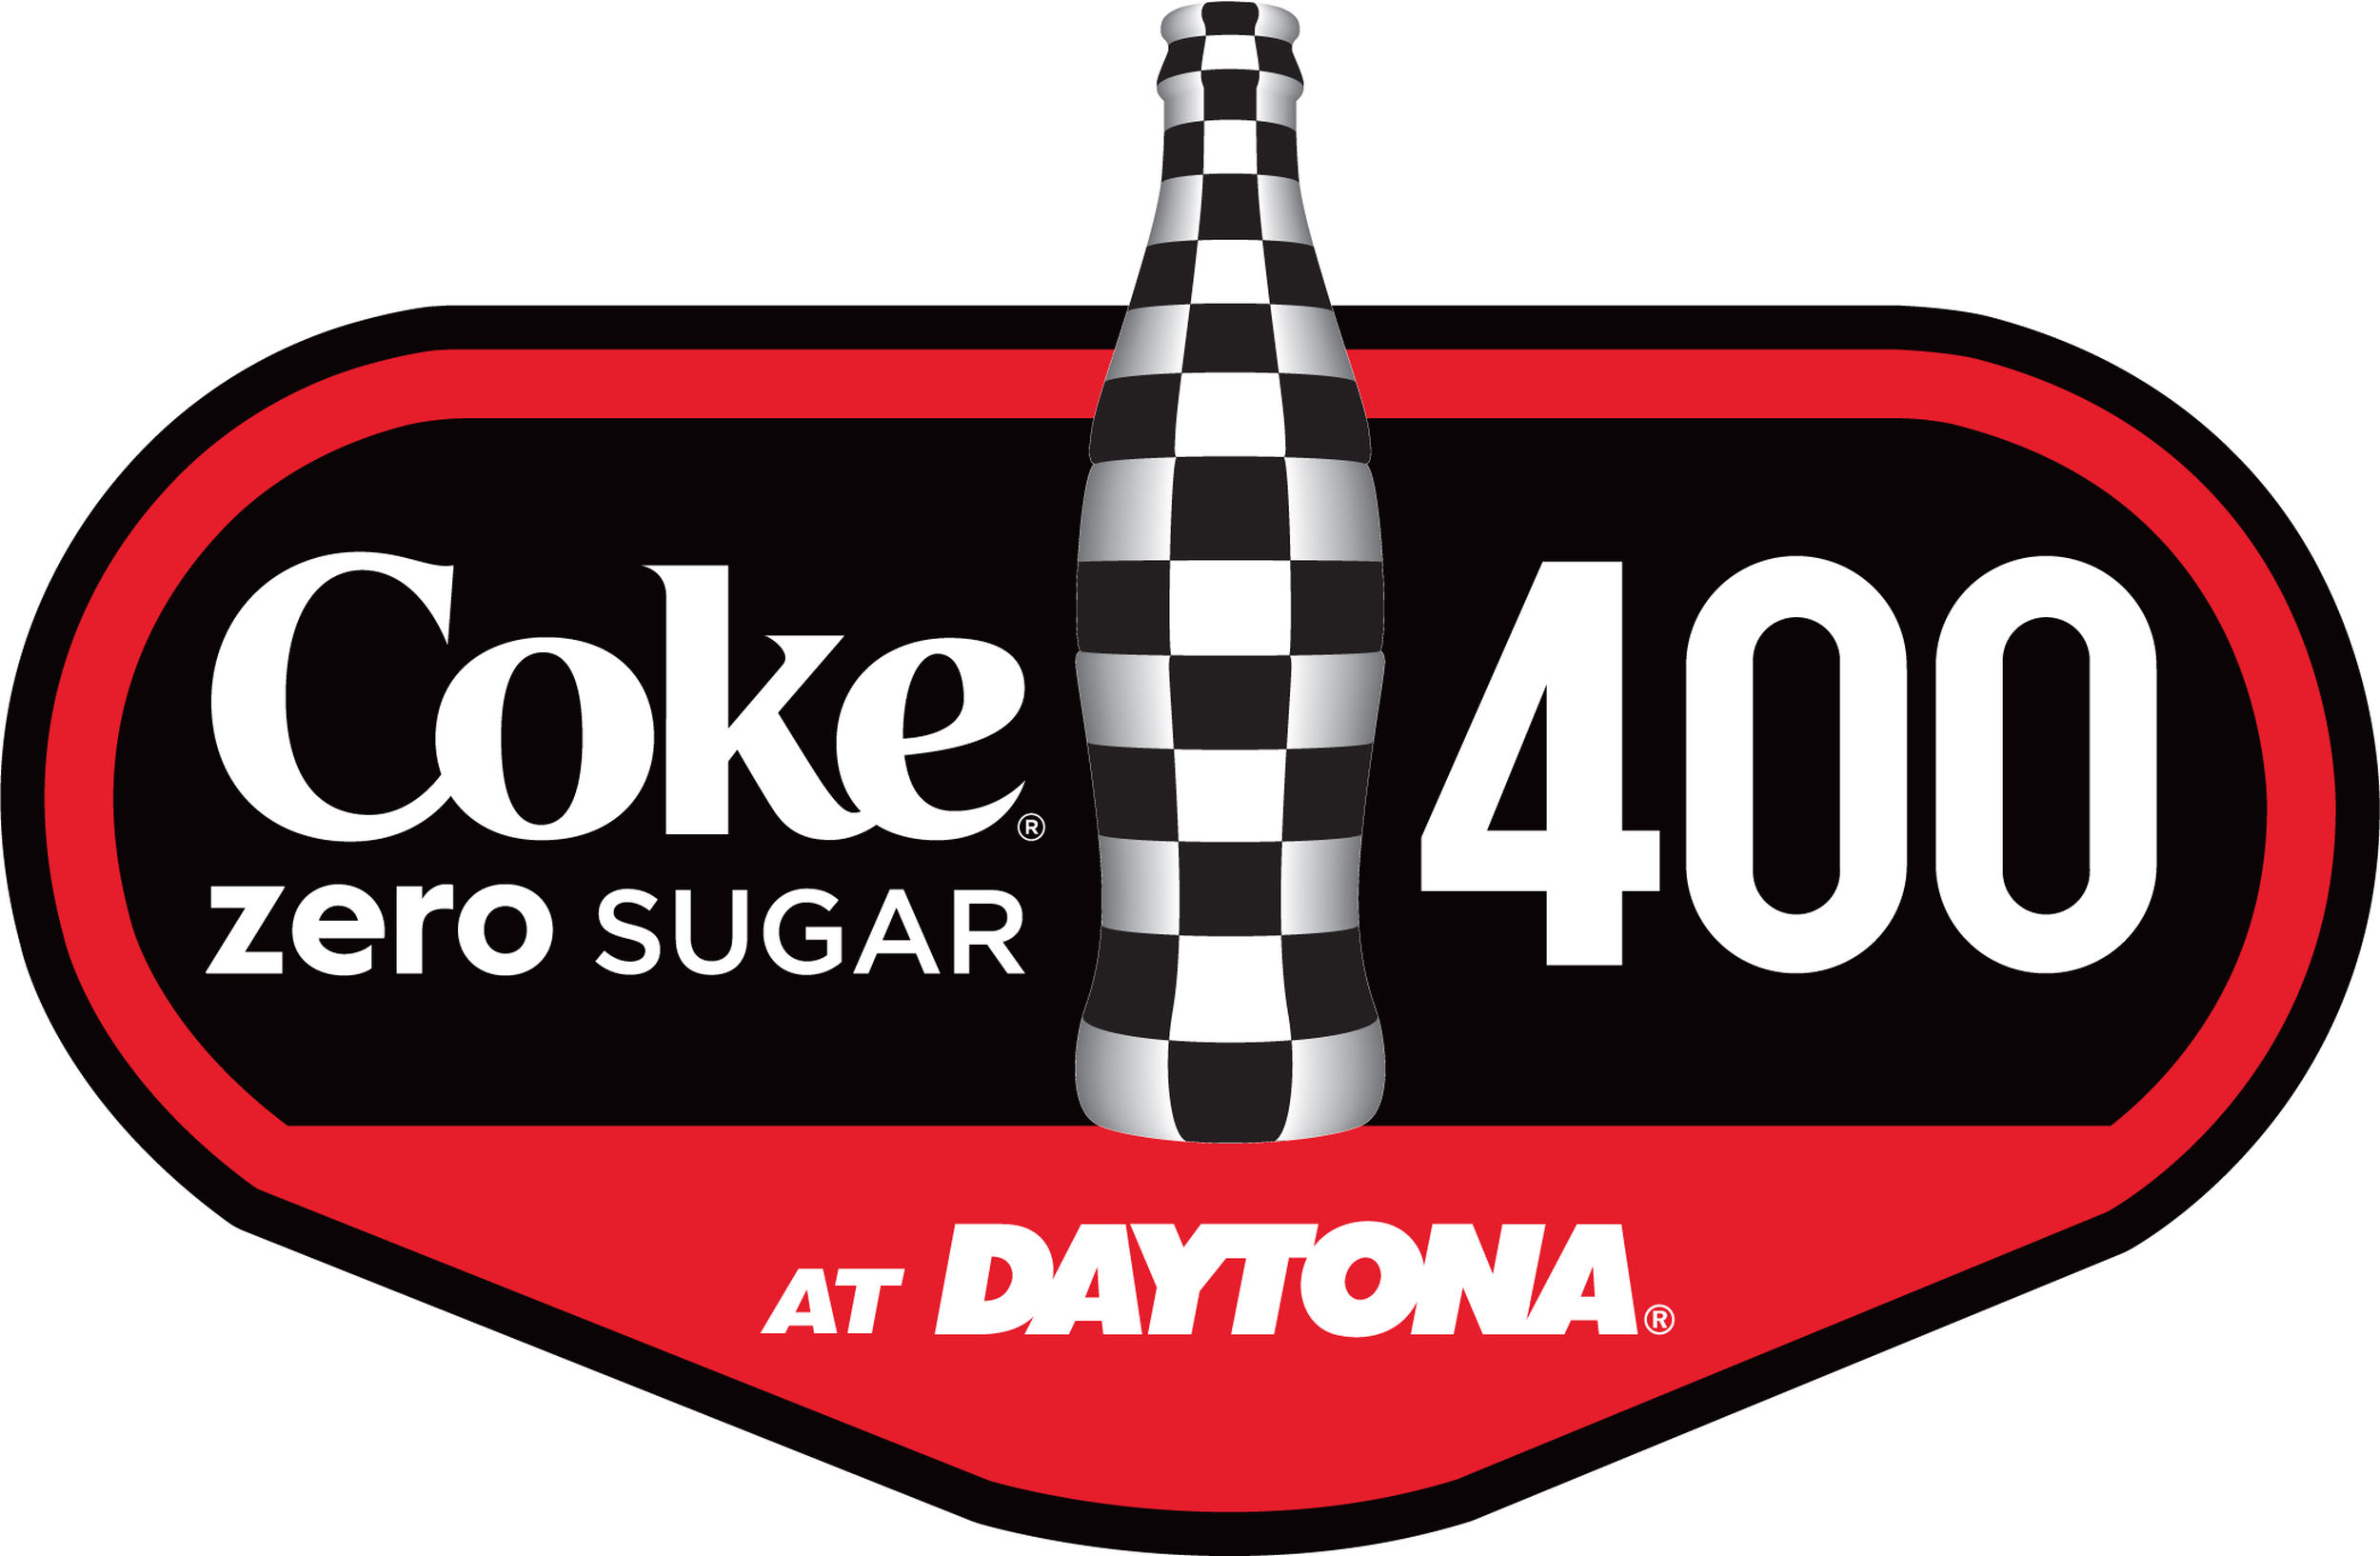 COKE ZERO SUGAR 400 Coming to Daytona Speedway